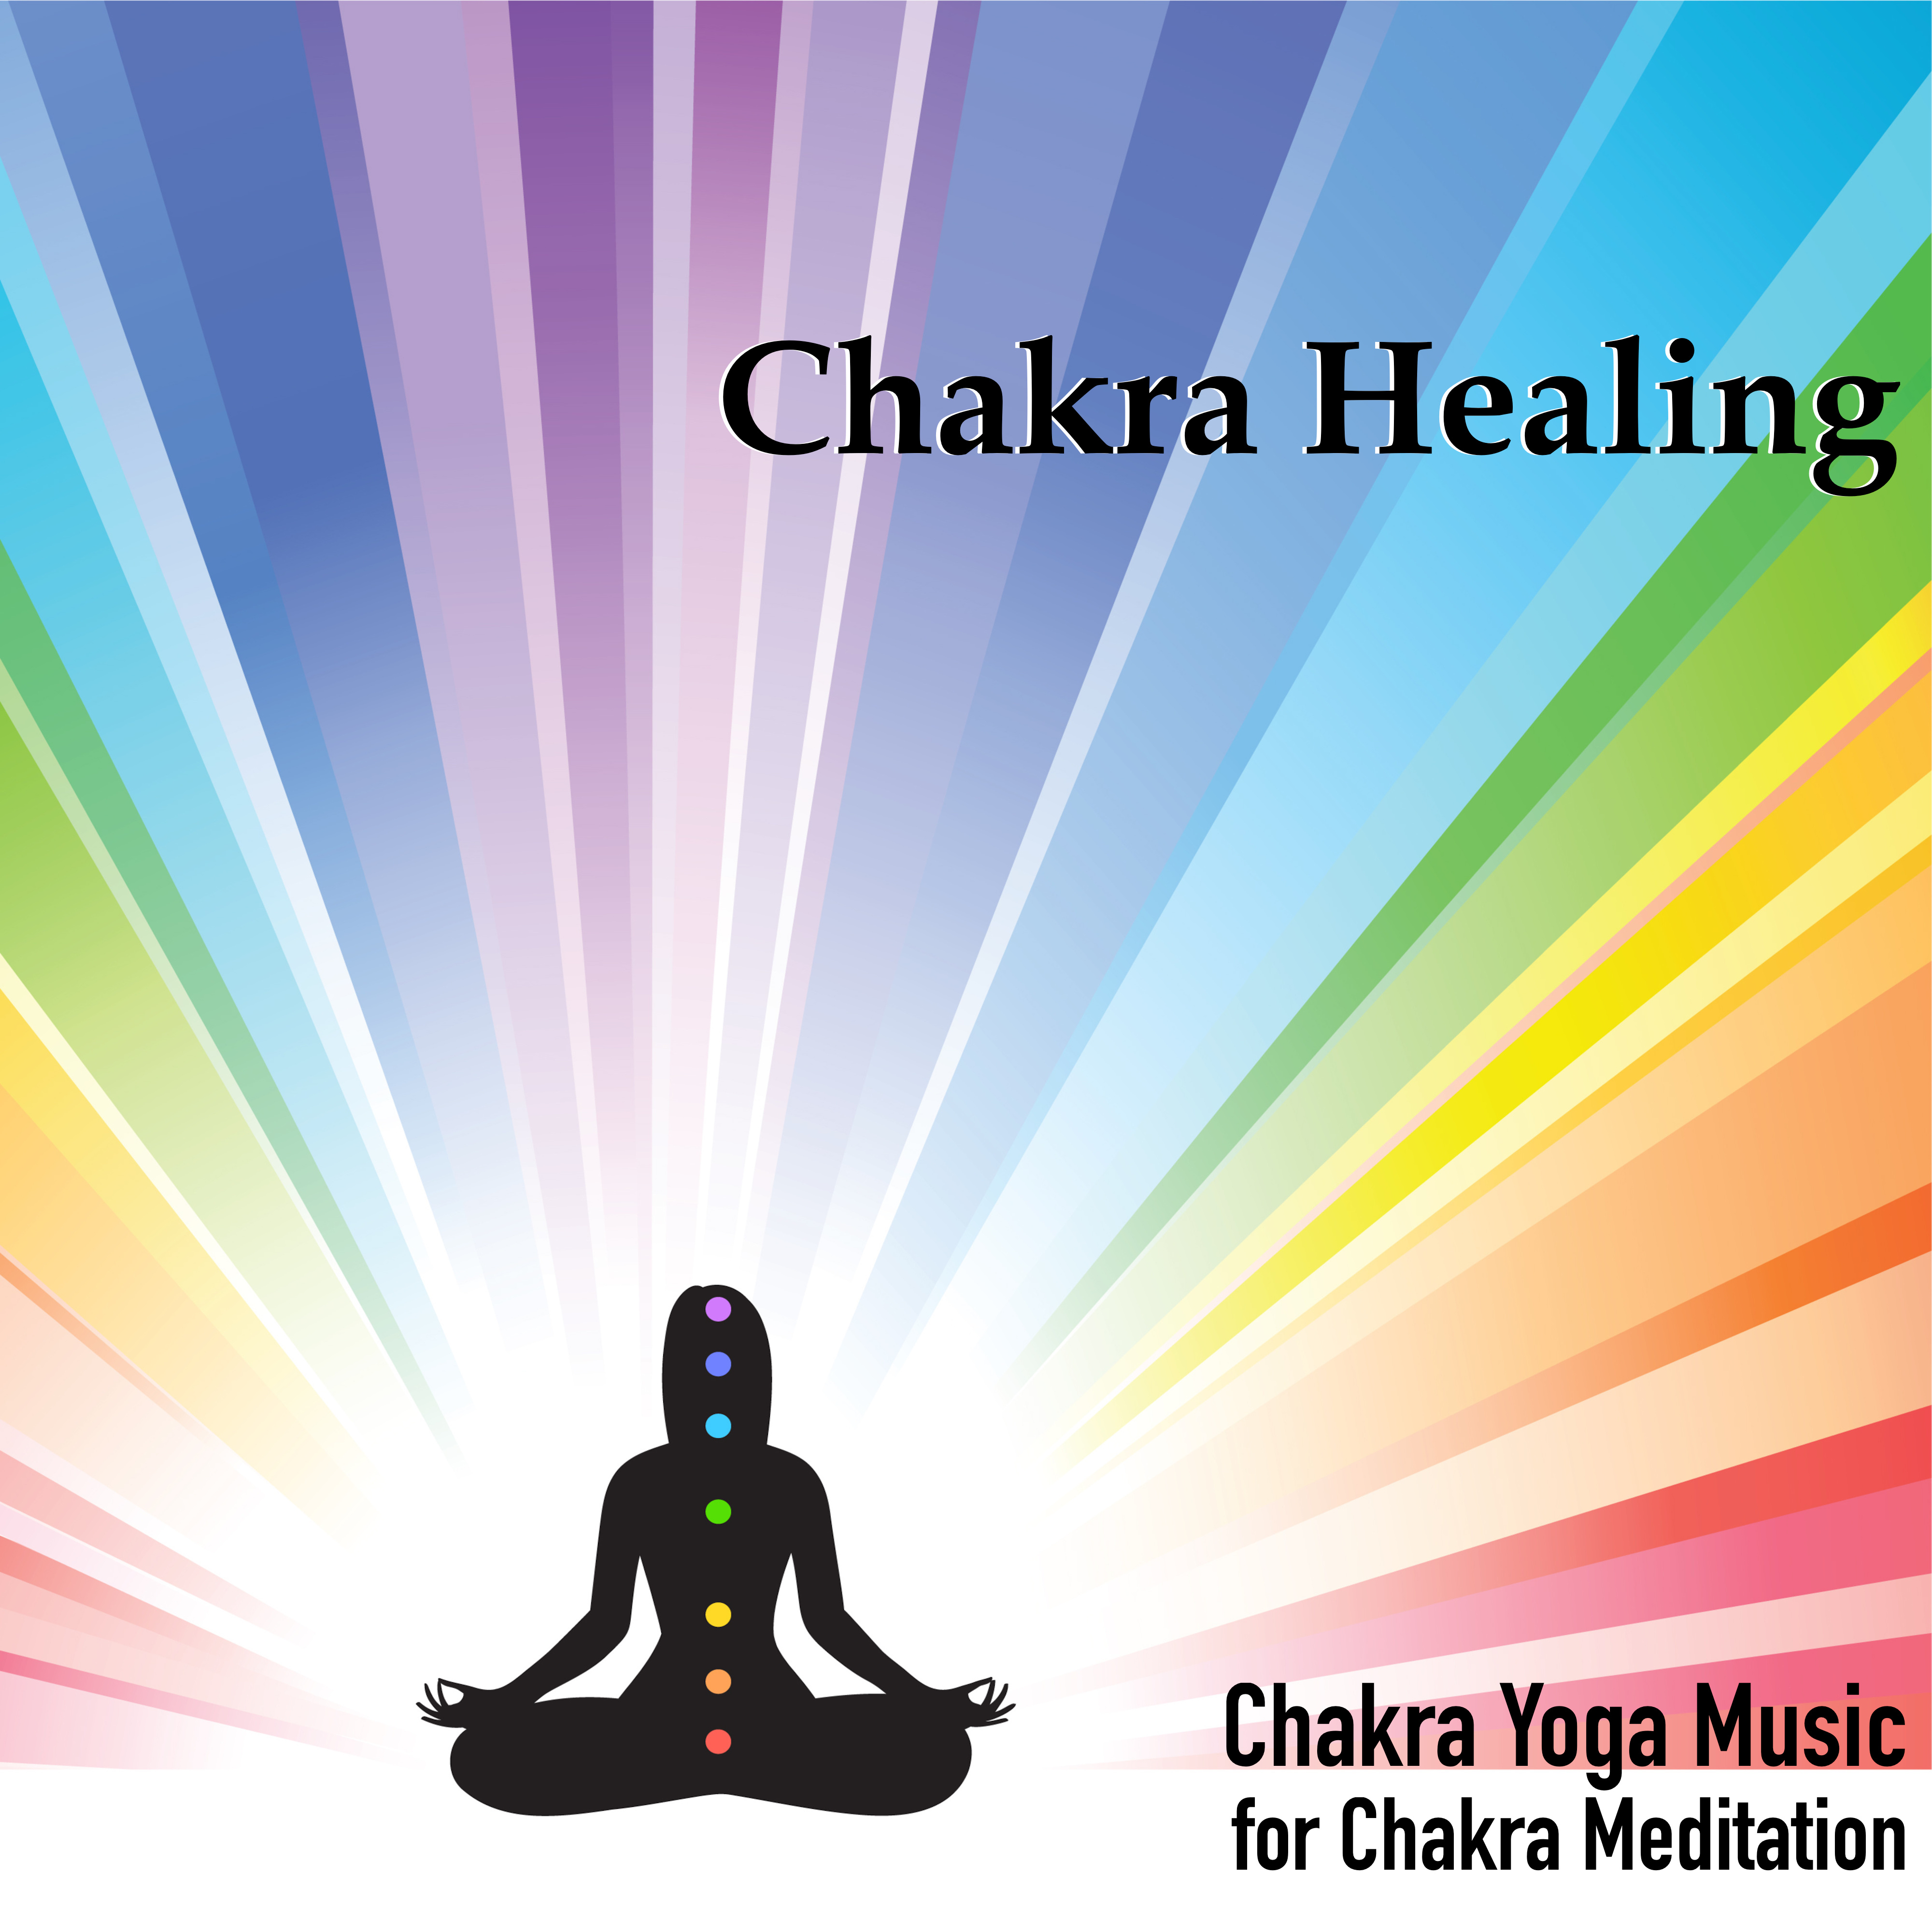 Chakra Healing - Chakra Yoga Music for Chakra Meditation